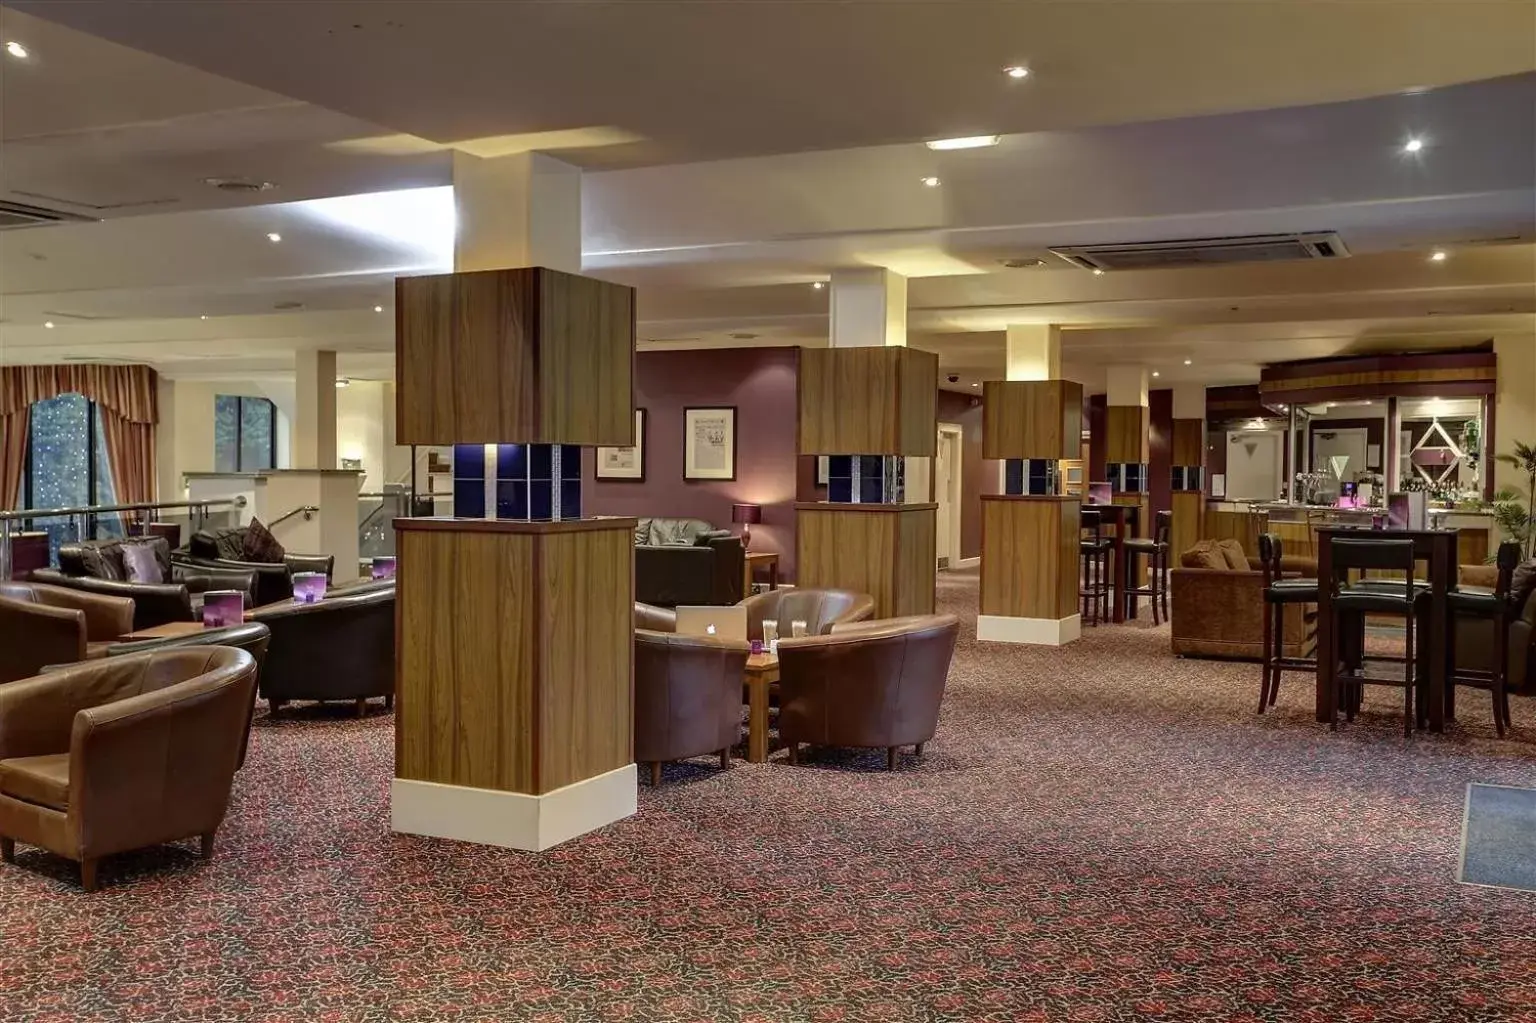 Lounge or bar in BRILLIANT Park Hall Hotel,Chorley